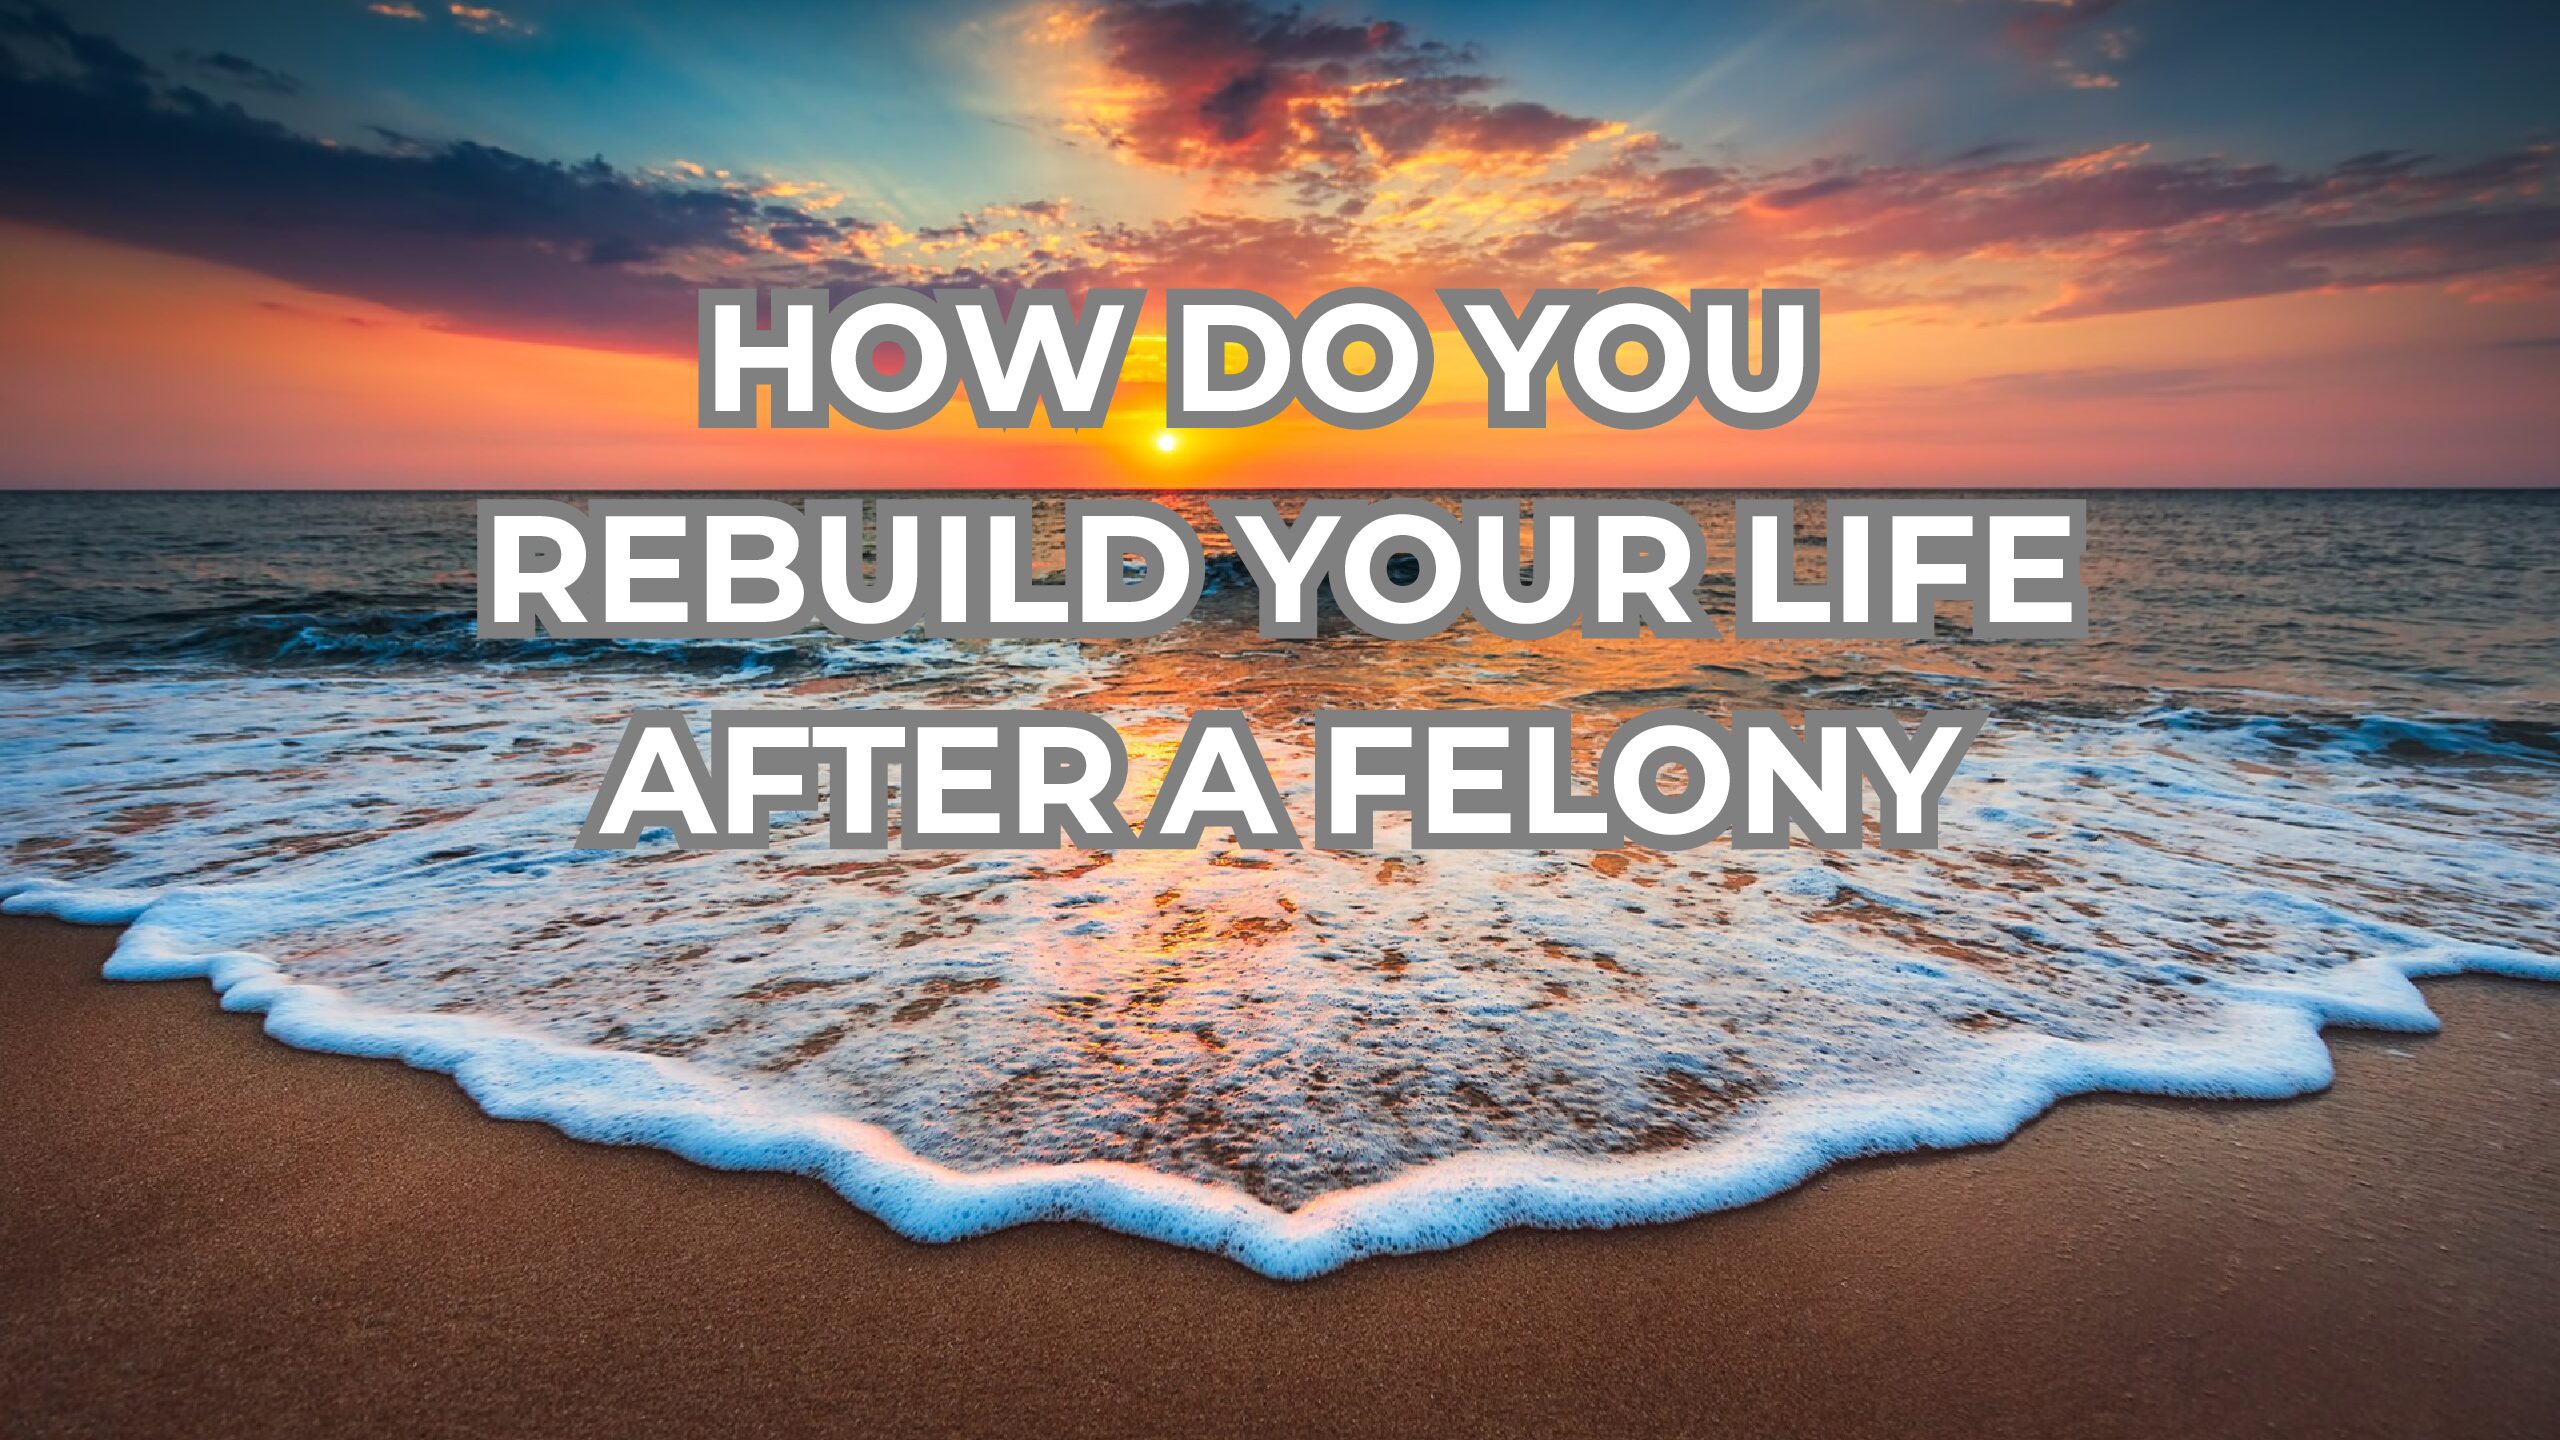 HOW DO YOU REBUILD YOUR LIFE AFTER A FELONY